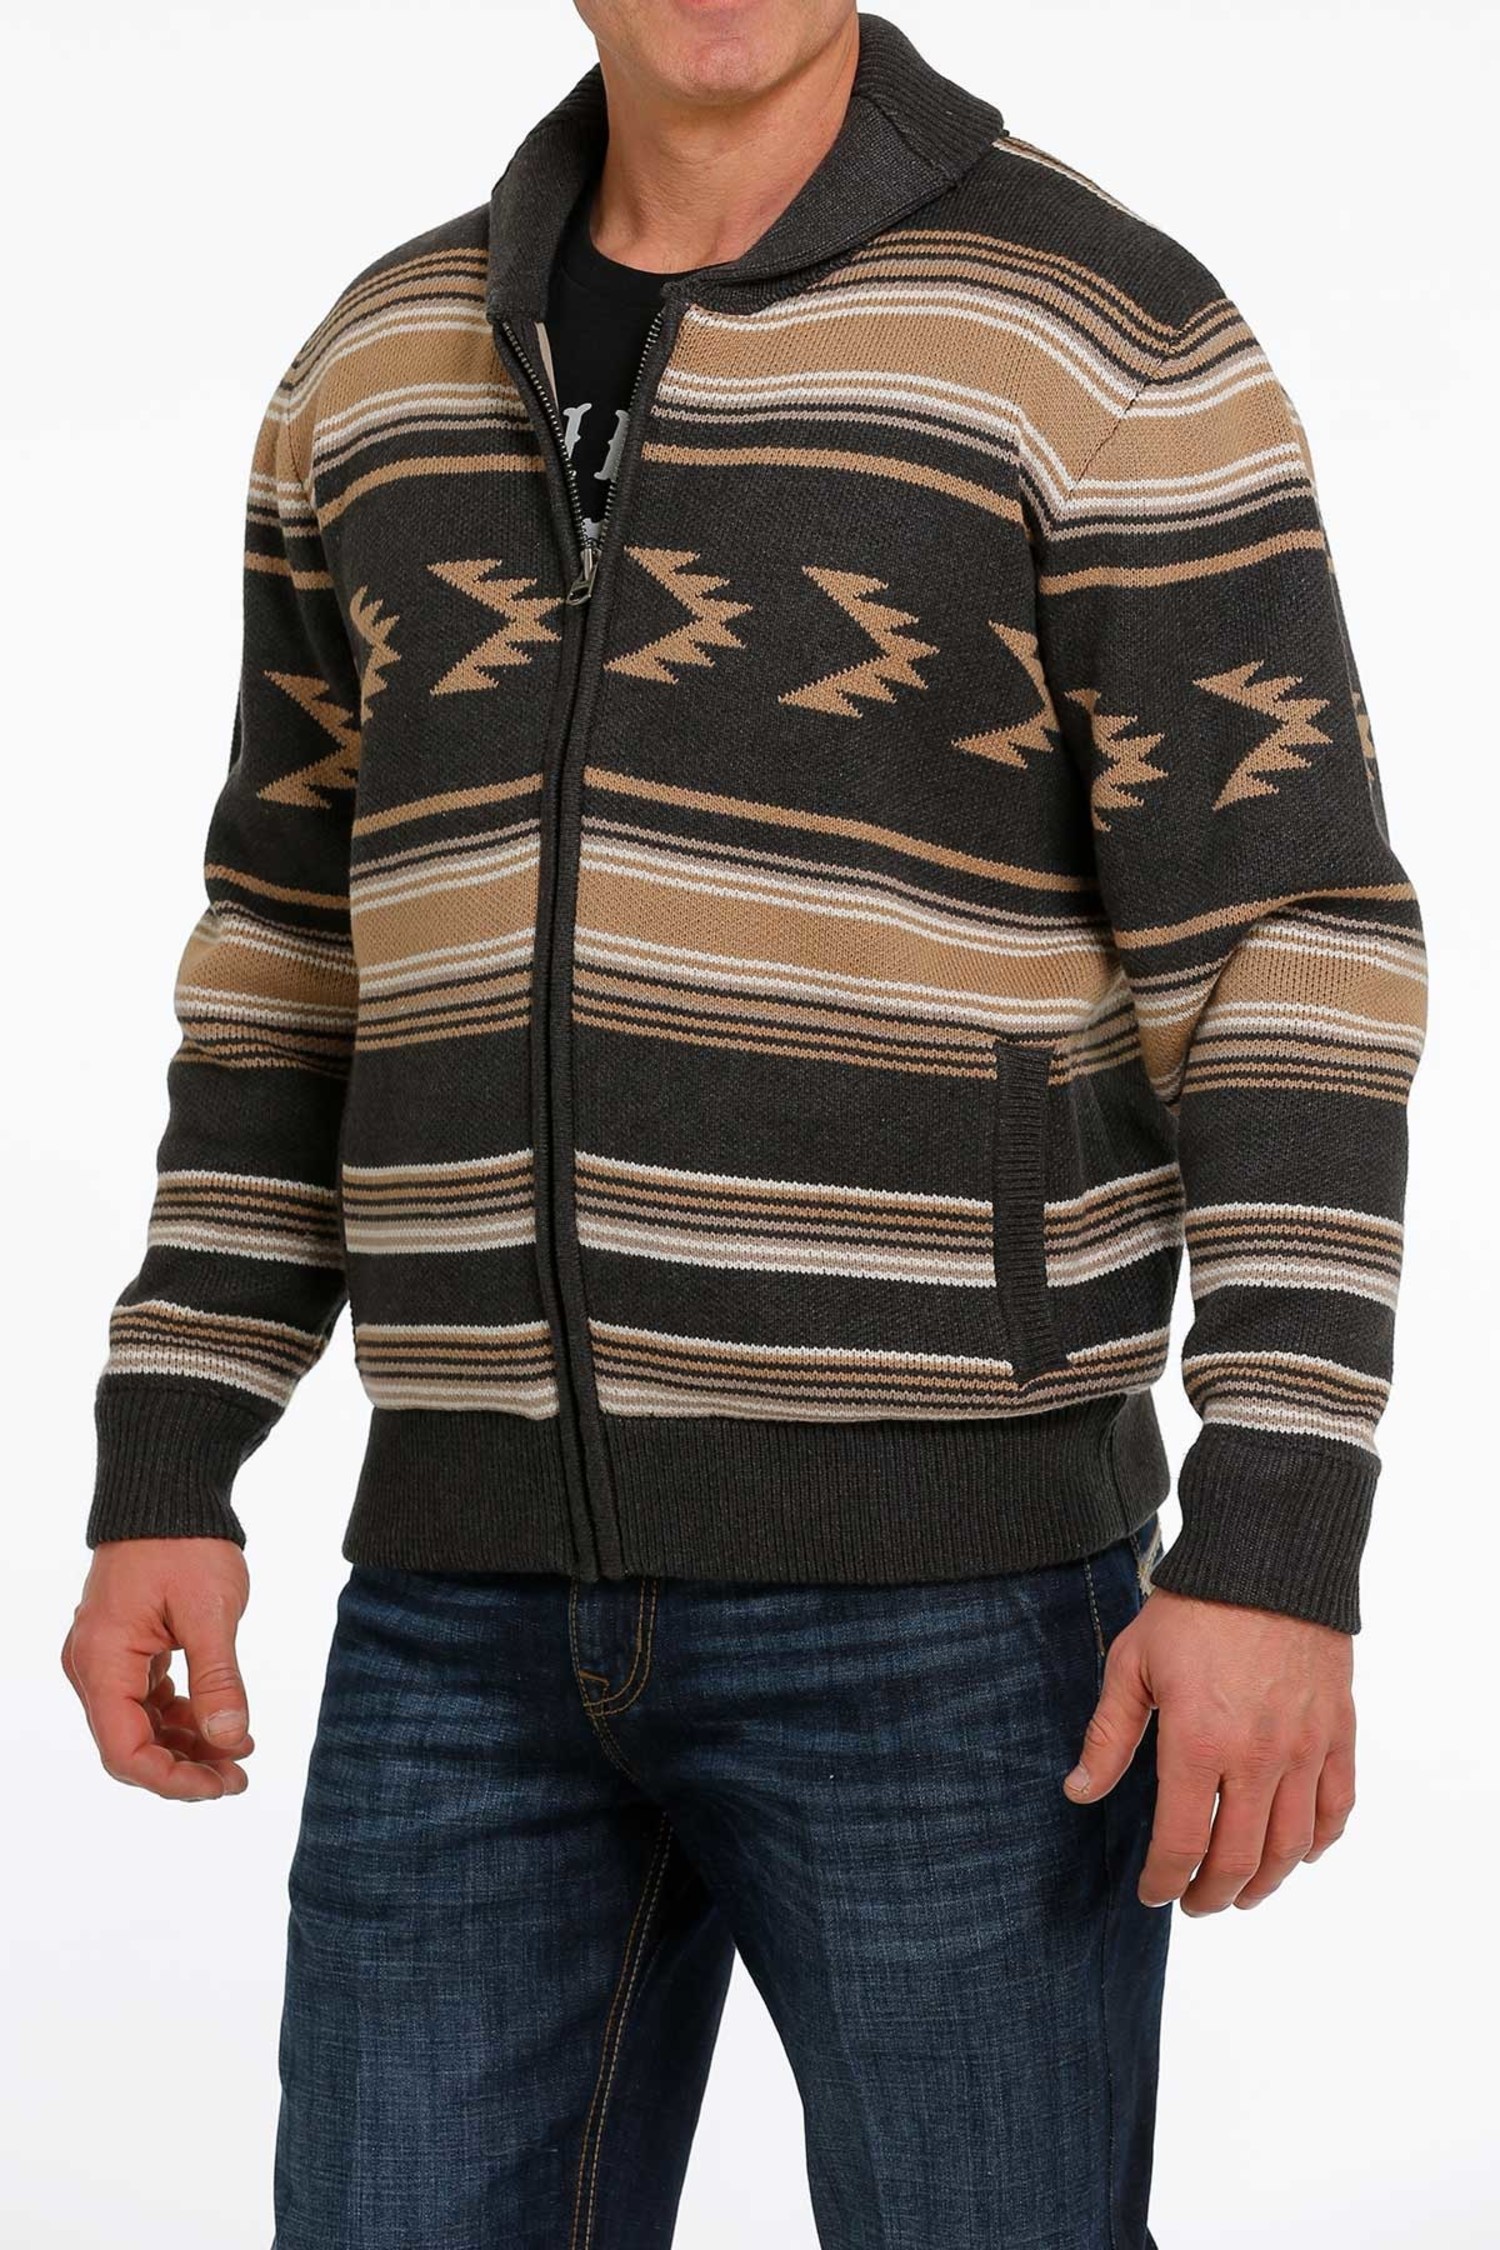 Mens Zip-Up Aztec Print Pullover Sweater Charcoal - Frontier Western Shop